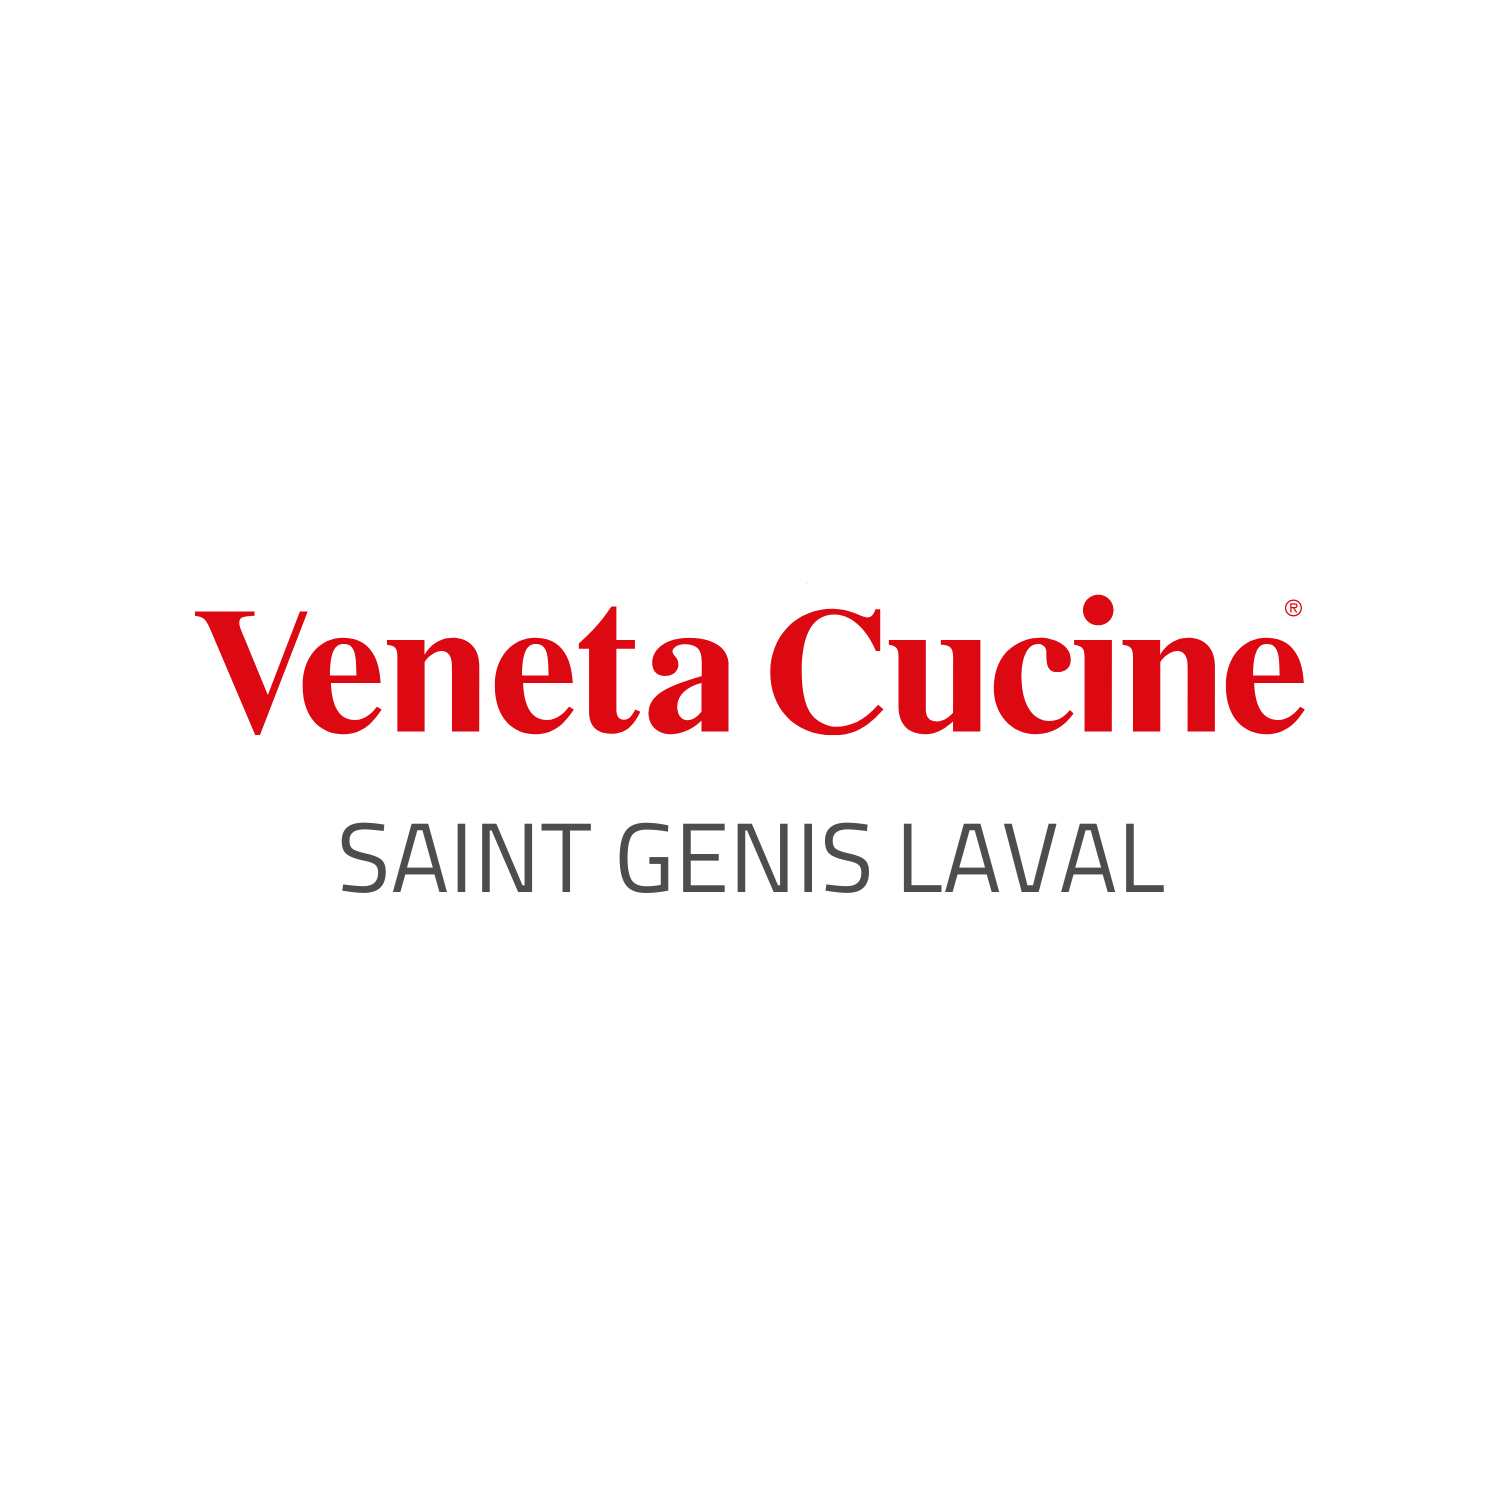 Veneta Cucine Saint-Genis-Laval